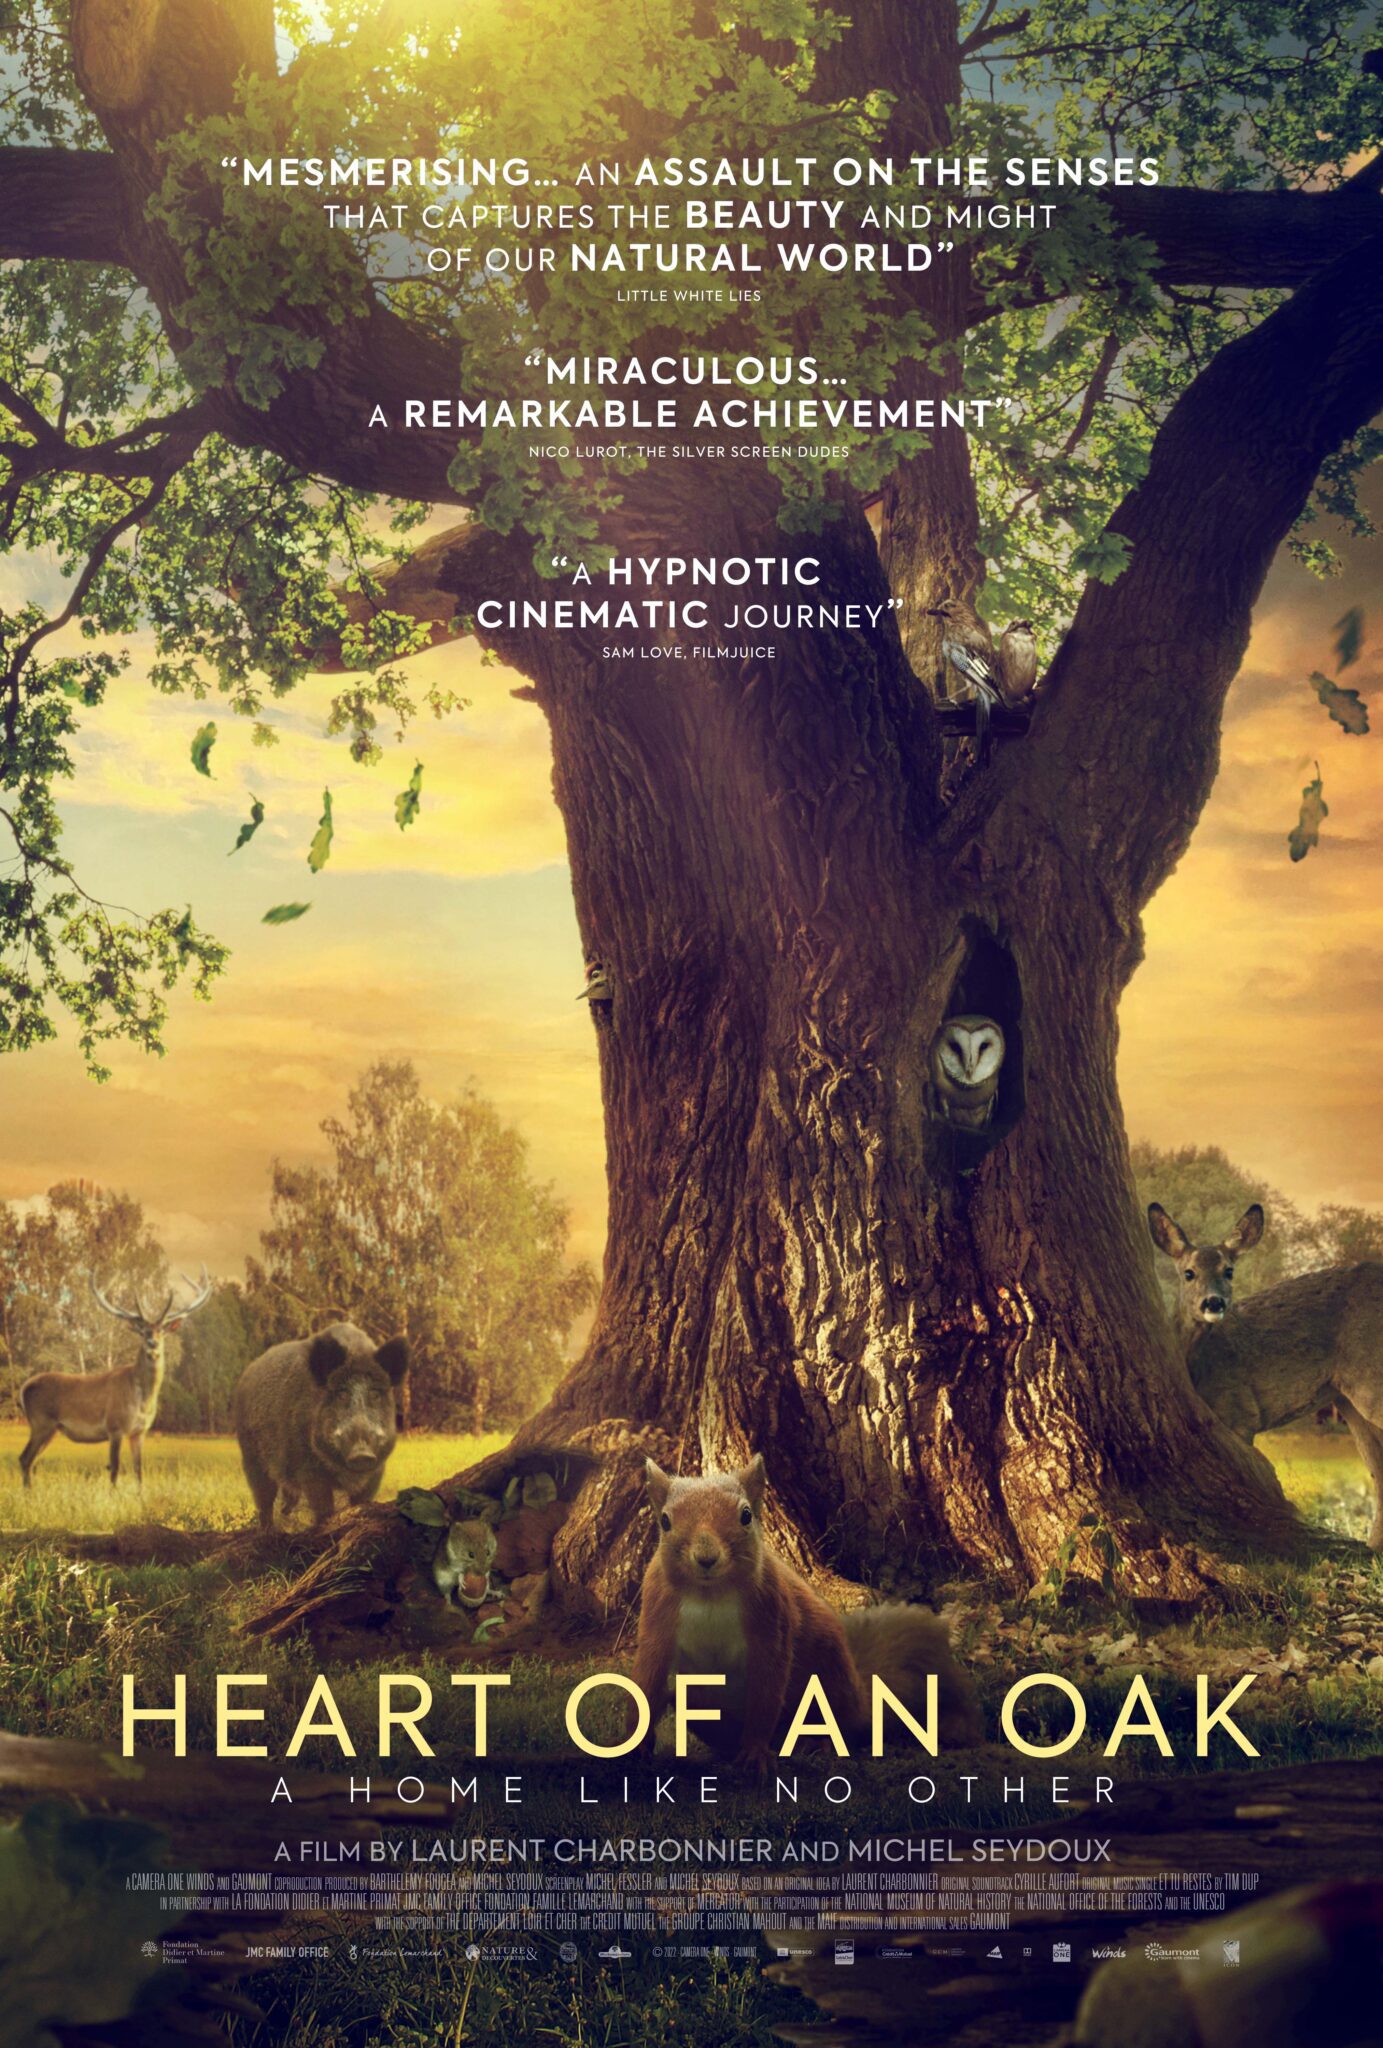 Heart of an Oak review - Moviehooker